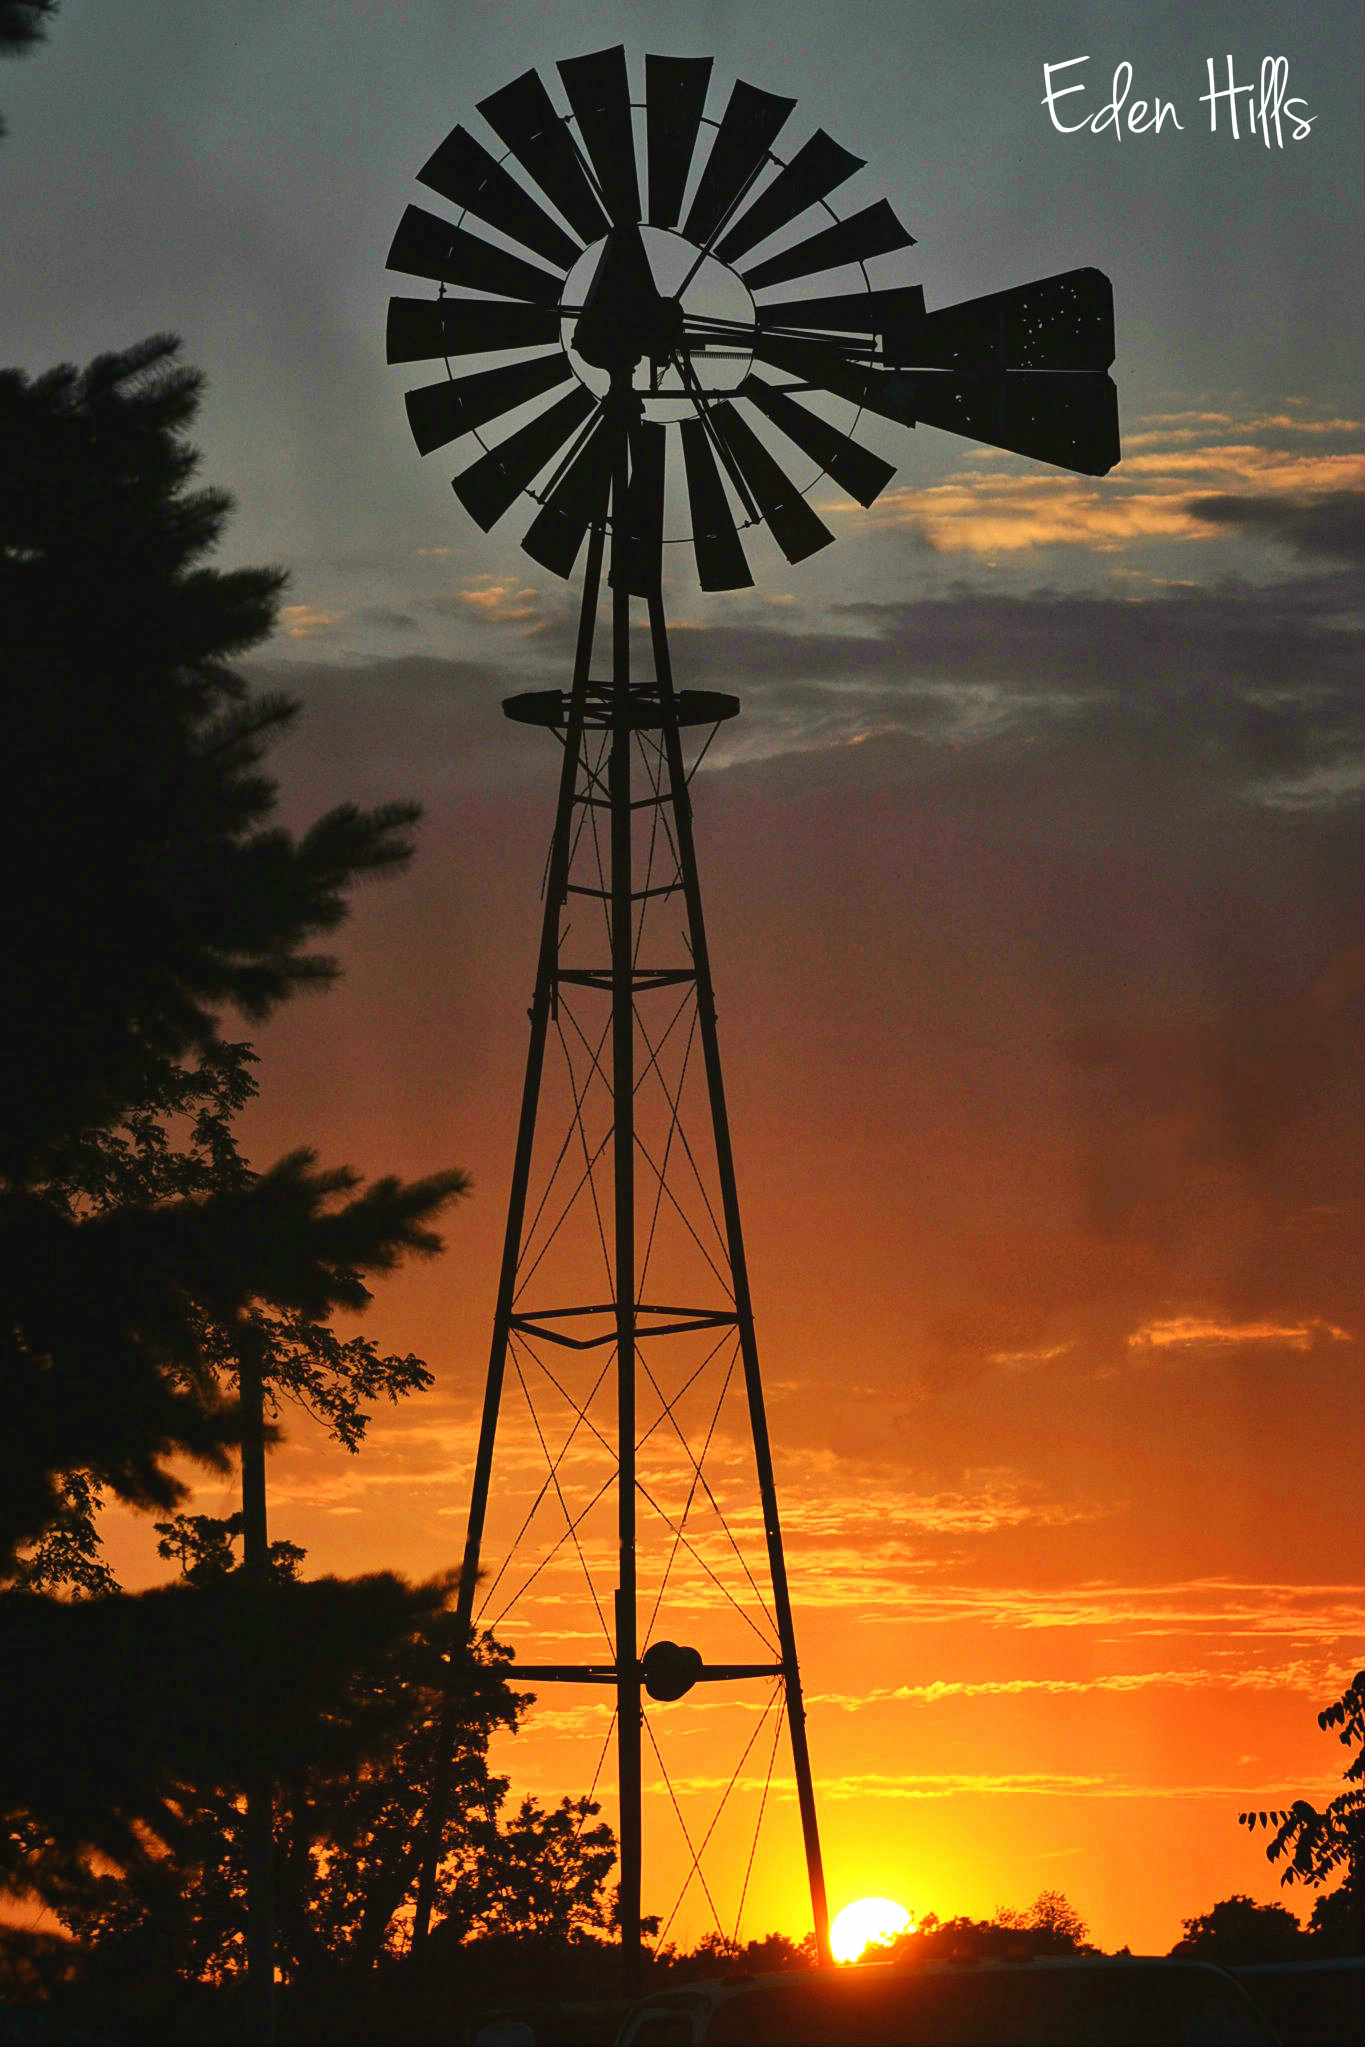 https://edenhills.files.wordpress.com/2012/12/windmill-sunset-w.jpg